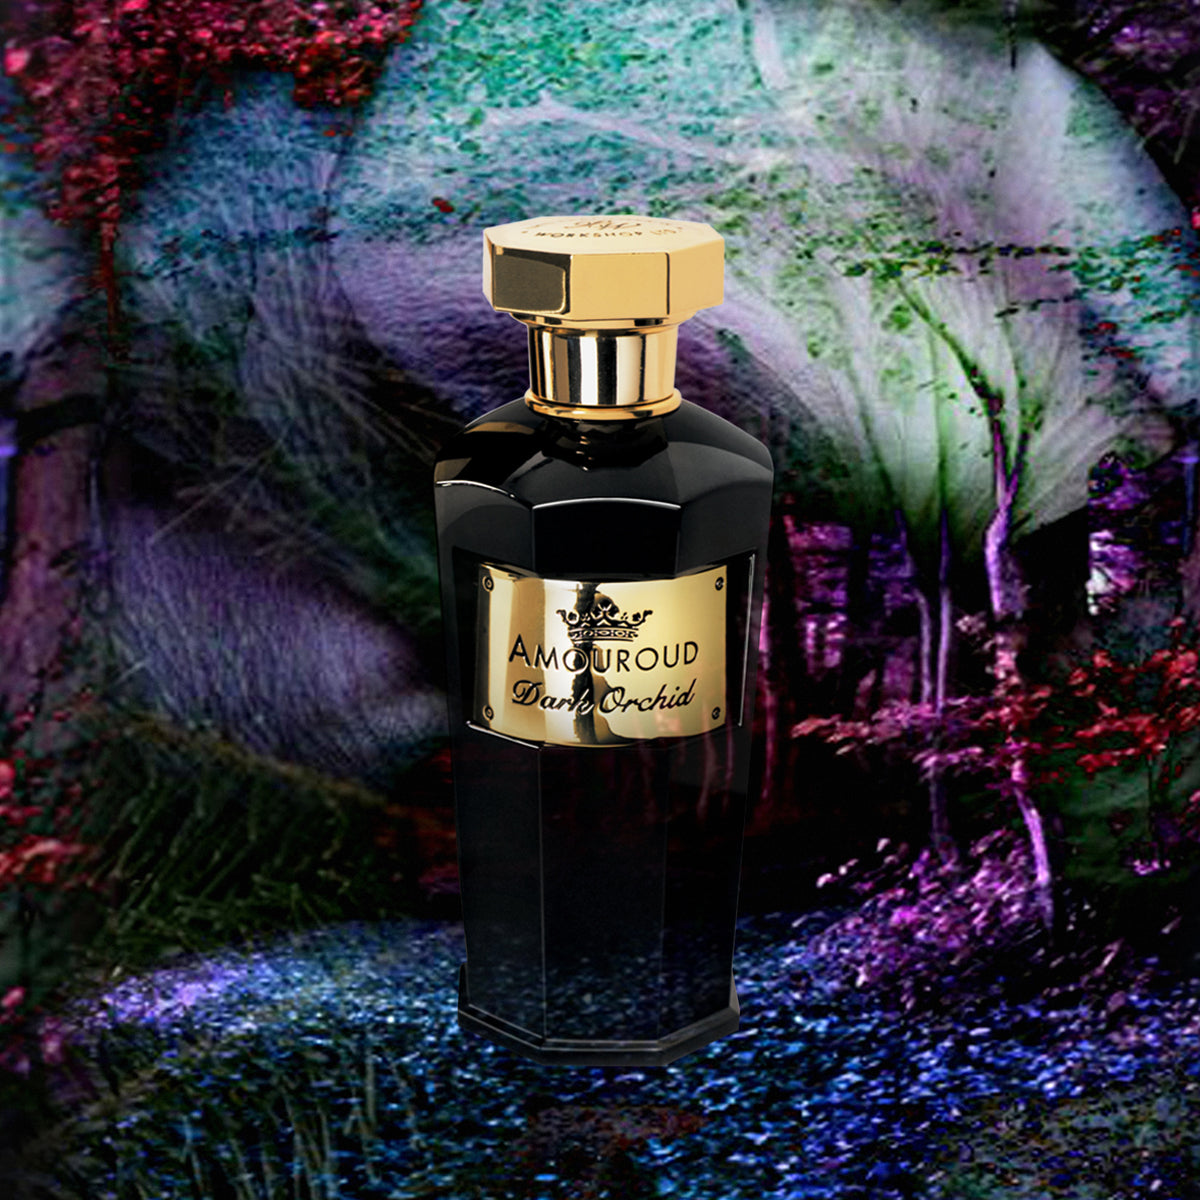 TREASURE OF ROSE EDP 100ML - The Fragrance Secrets